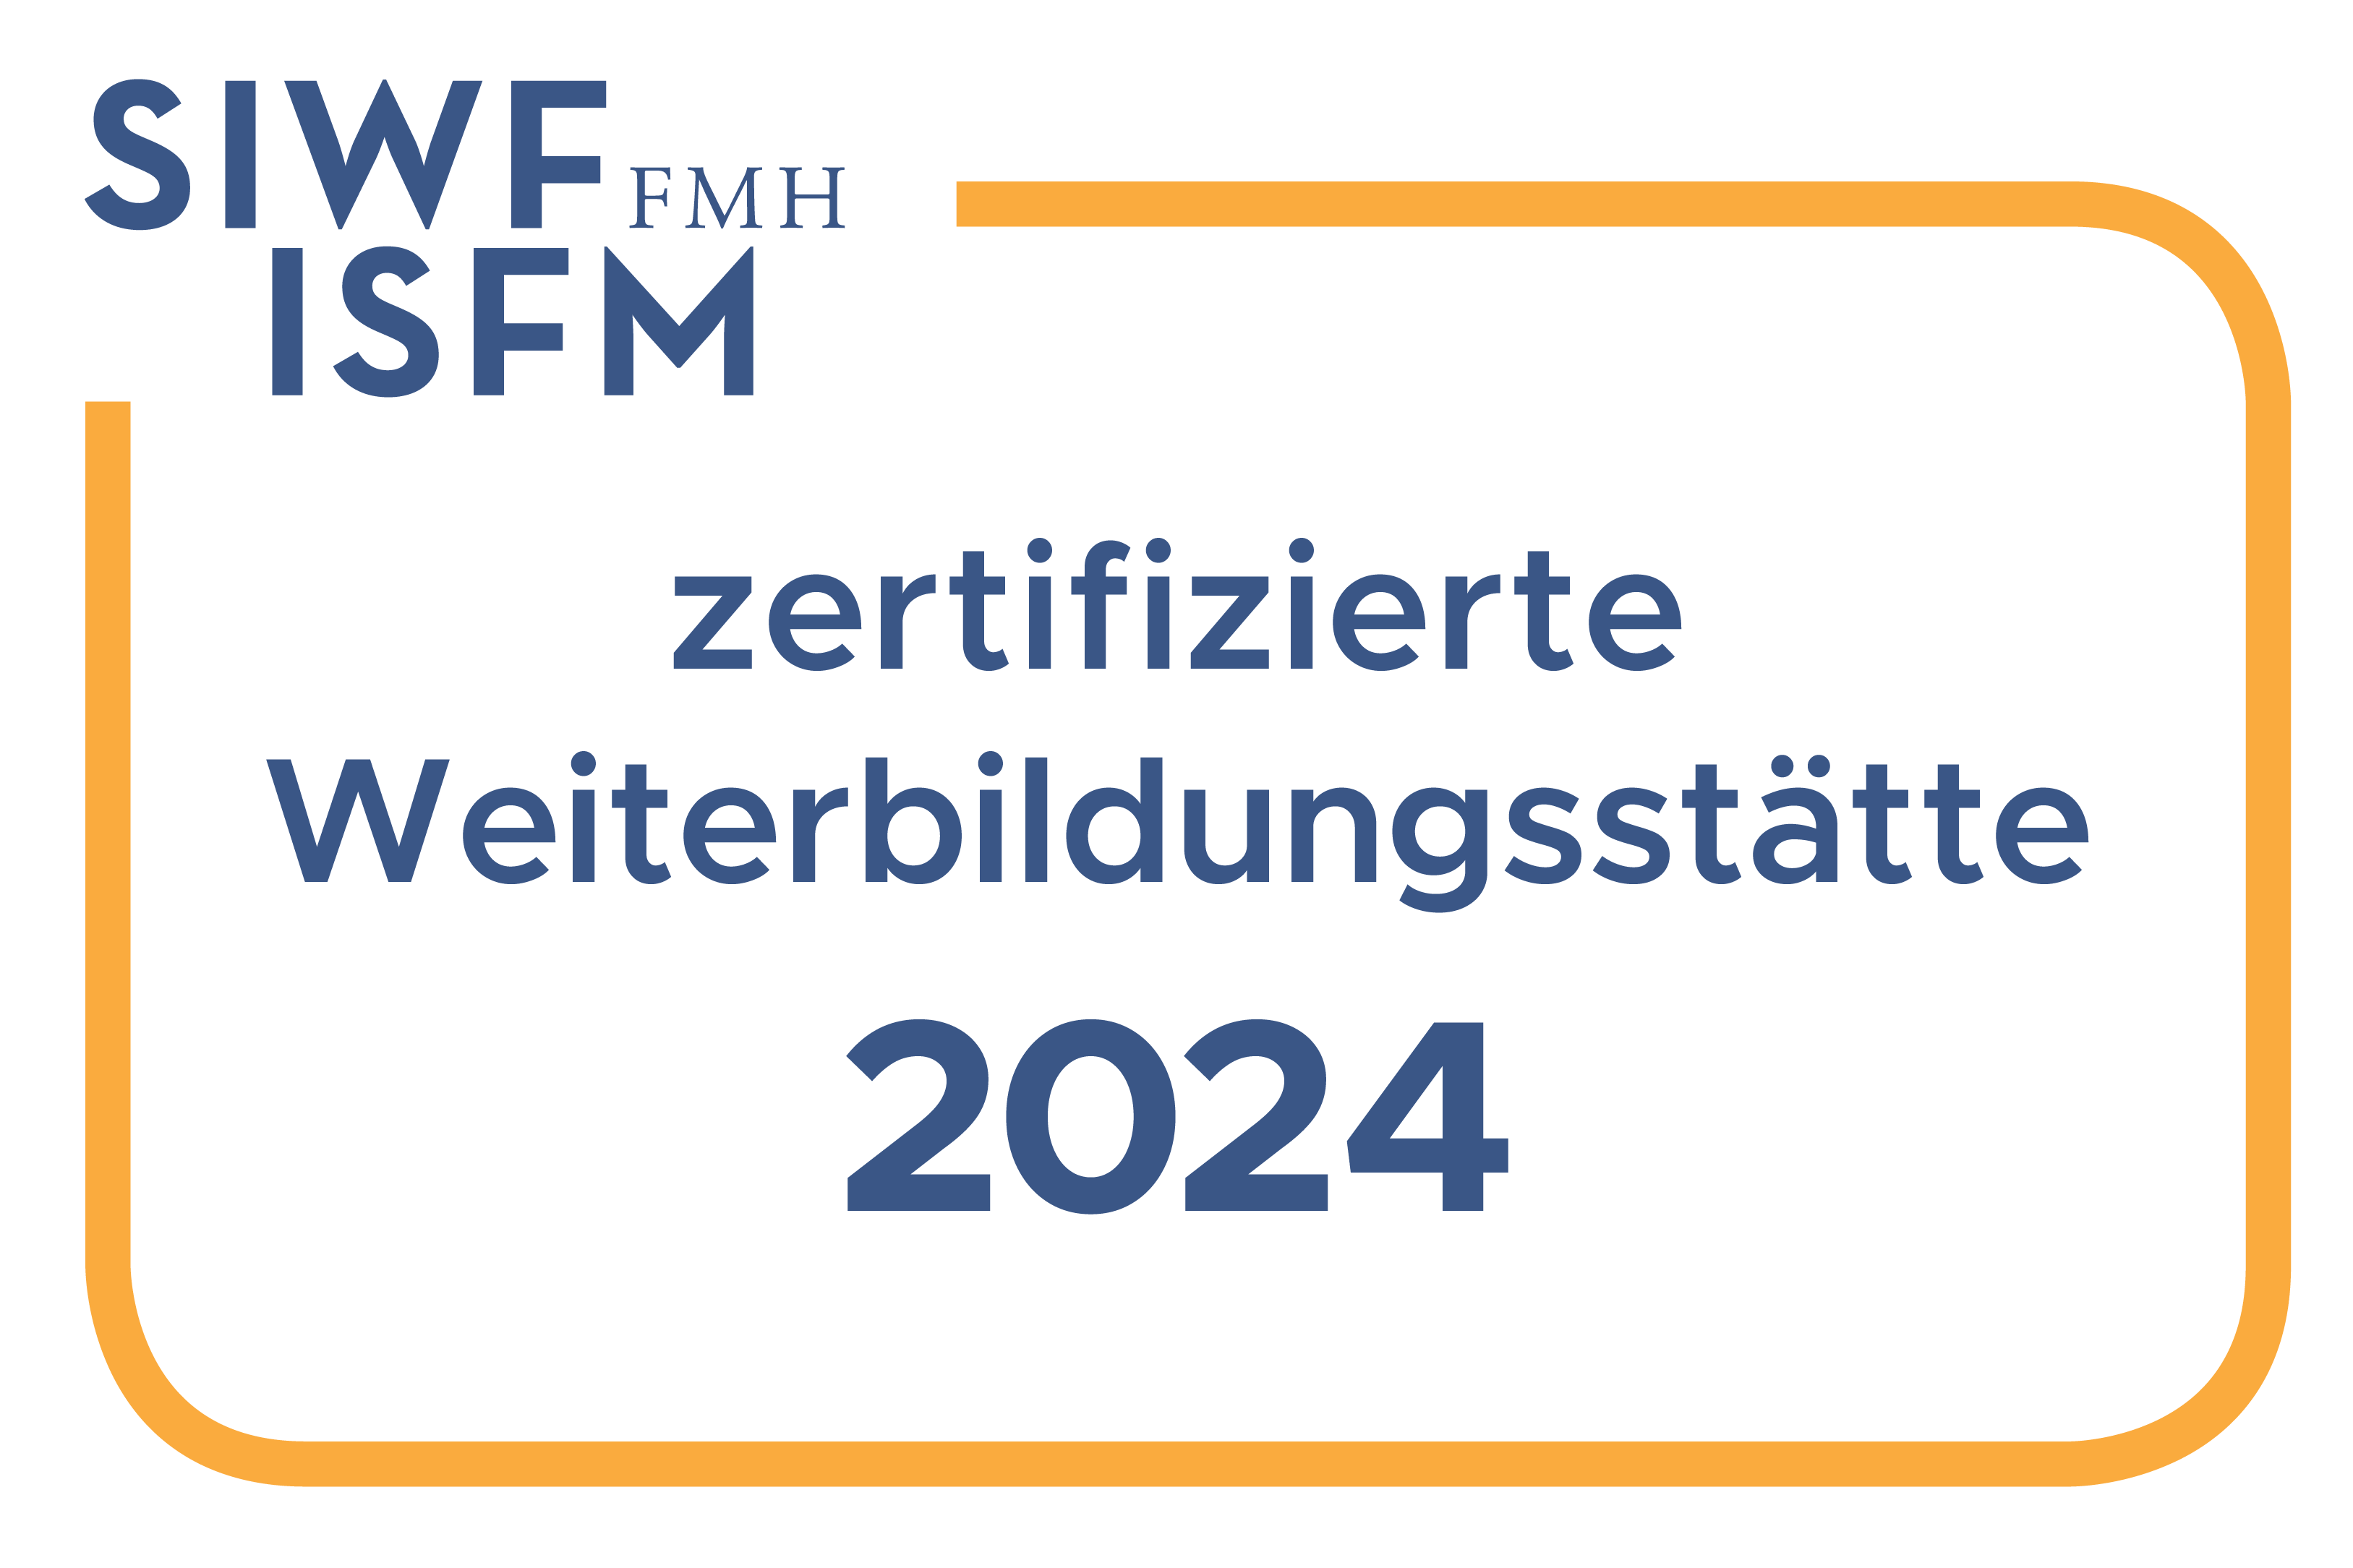 SIWF FMH ISFM 2024